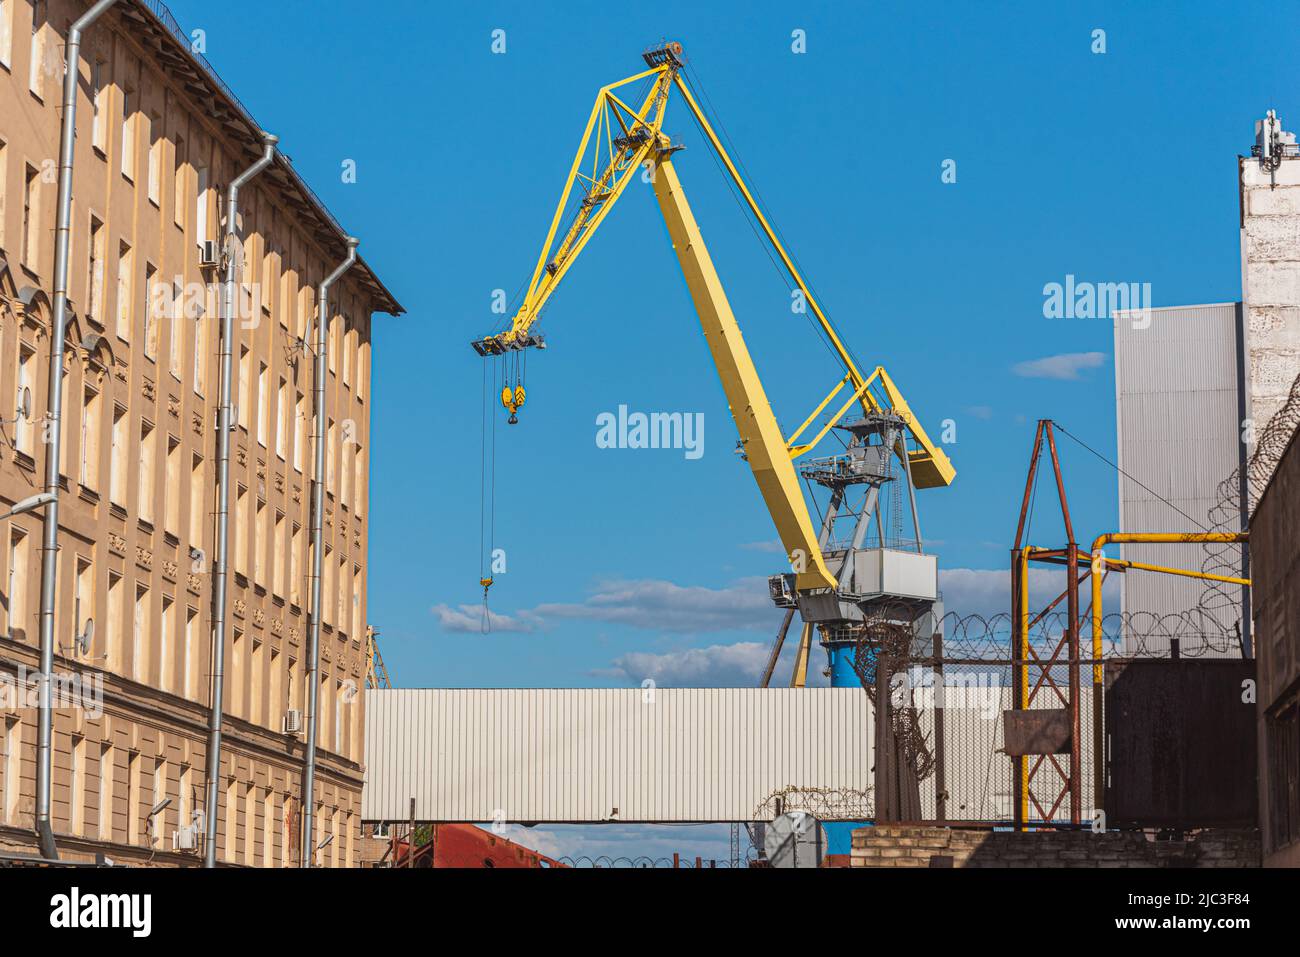 A crane in Baltic Shipyard against the blue sky - Saint Petersburg, Russia. Stock Photo